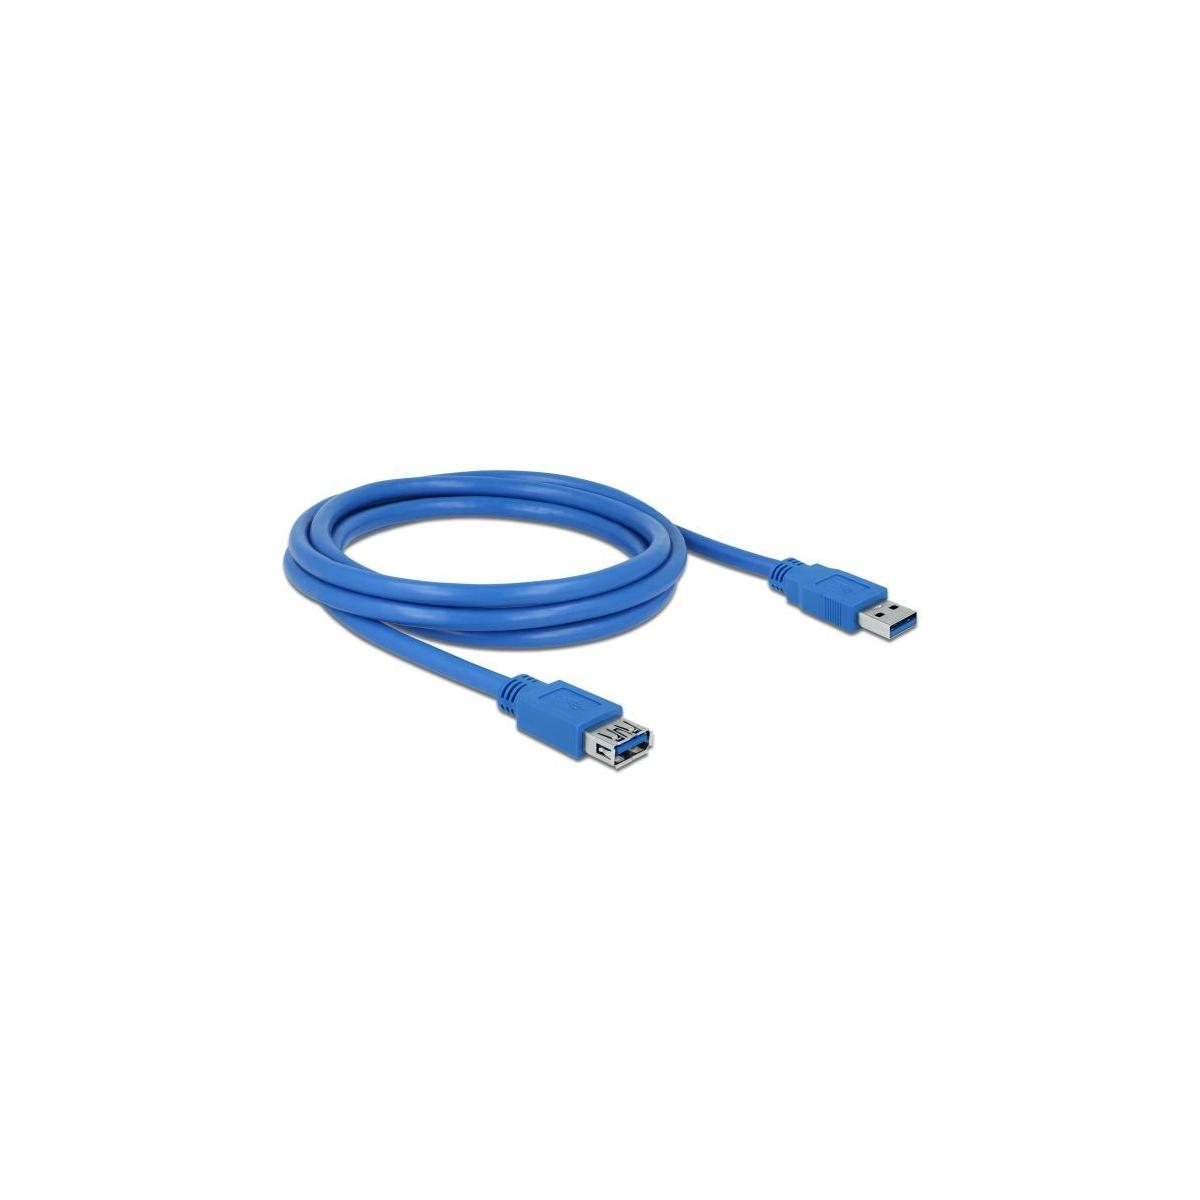 DELOCK USB Blau Kabel, 82539